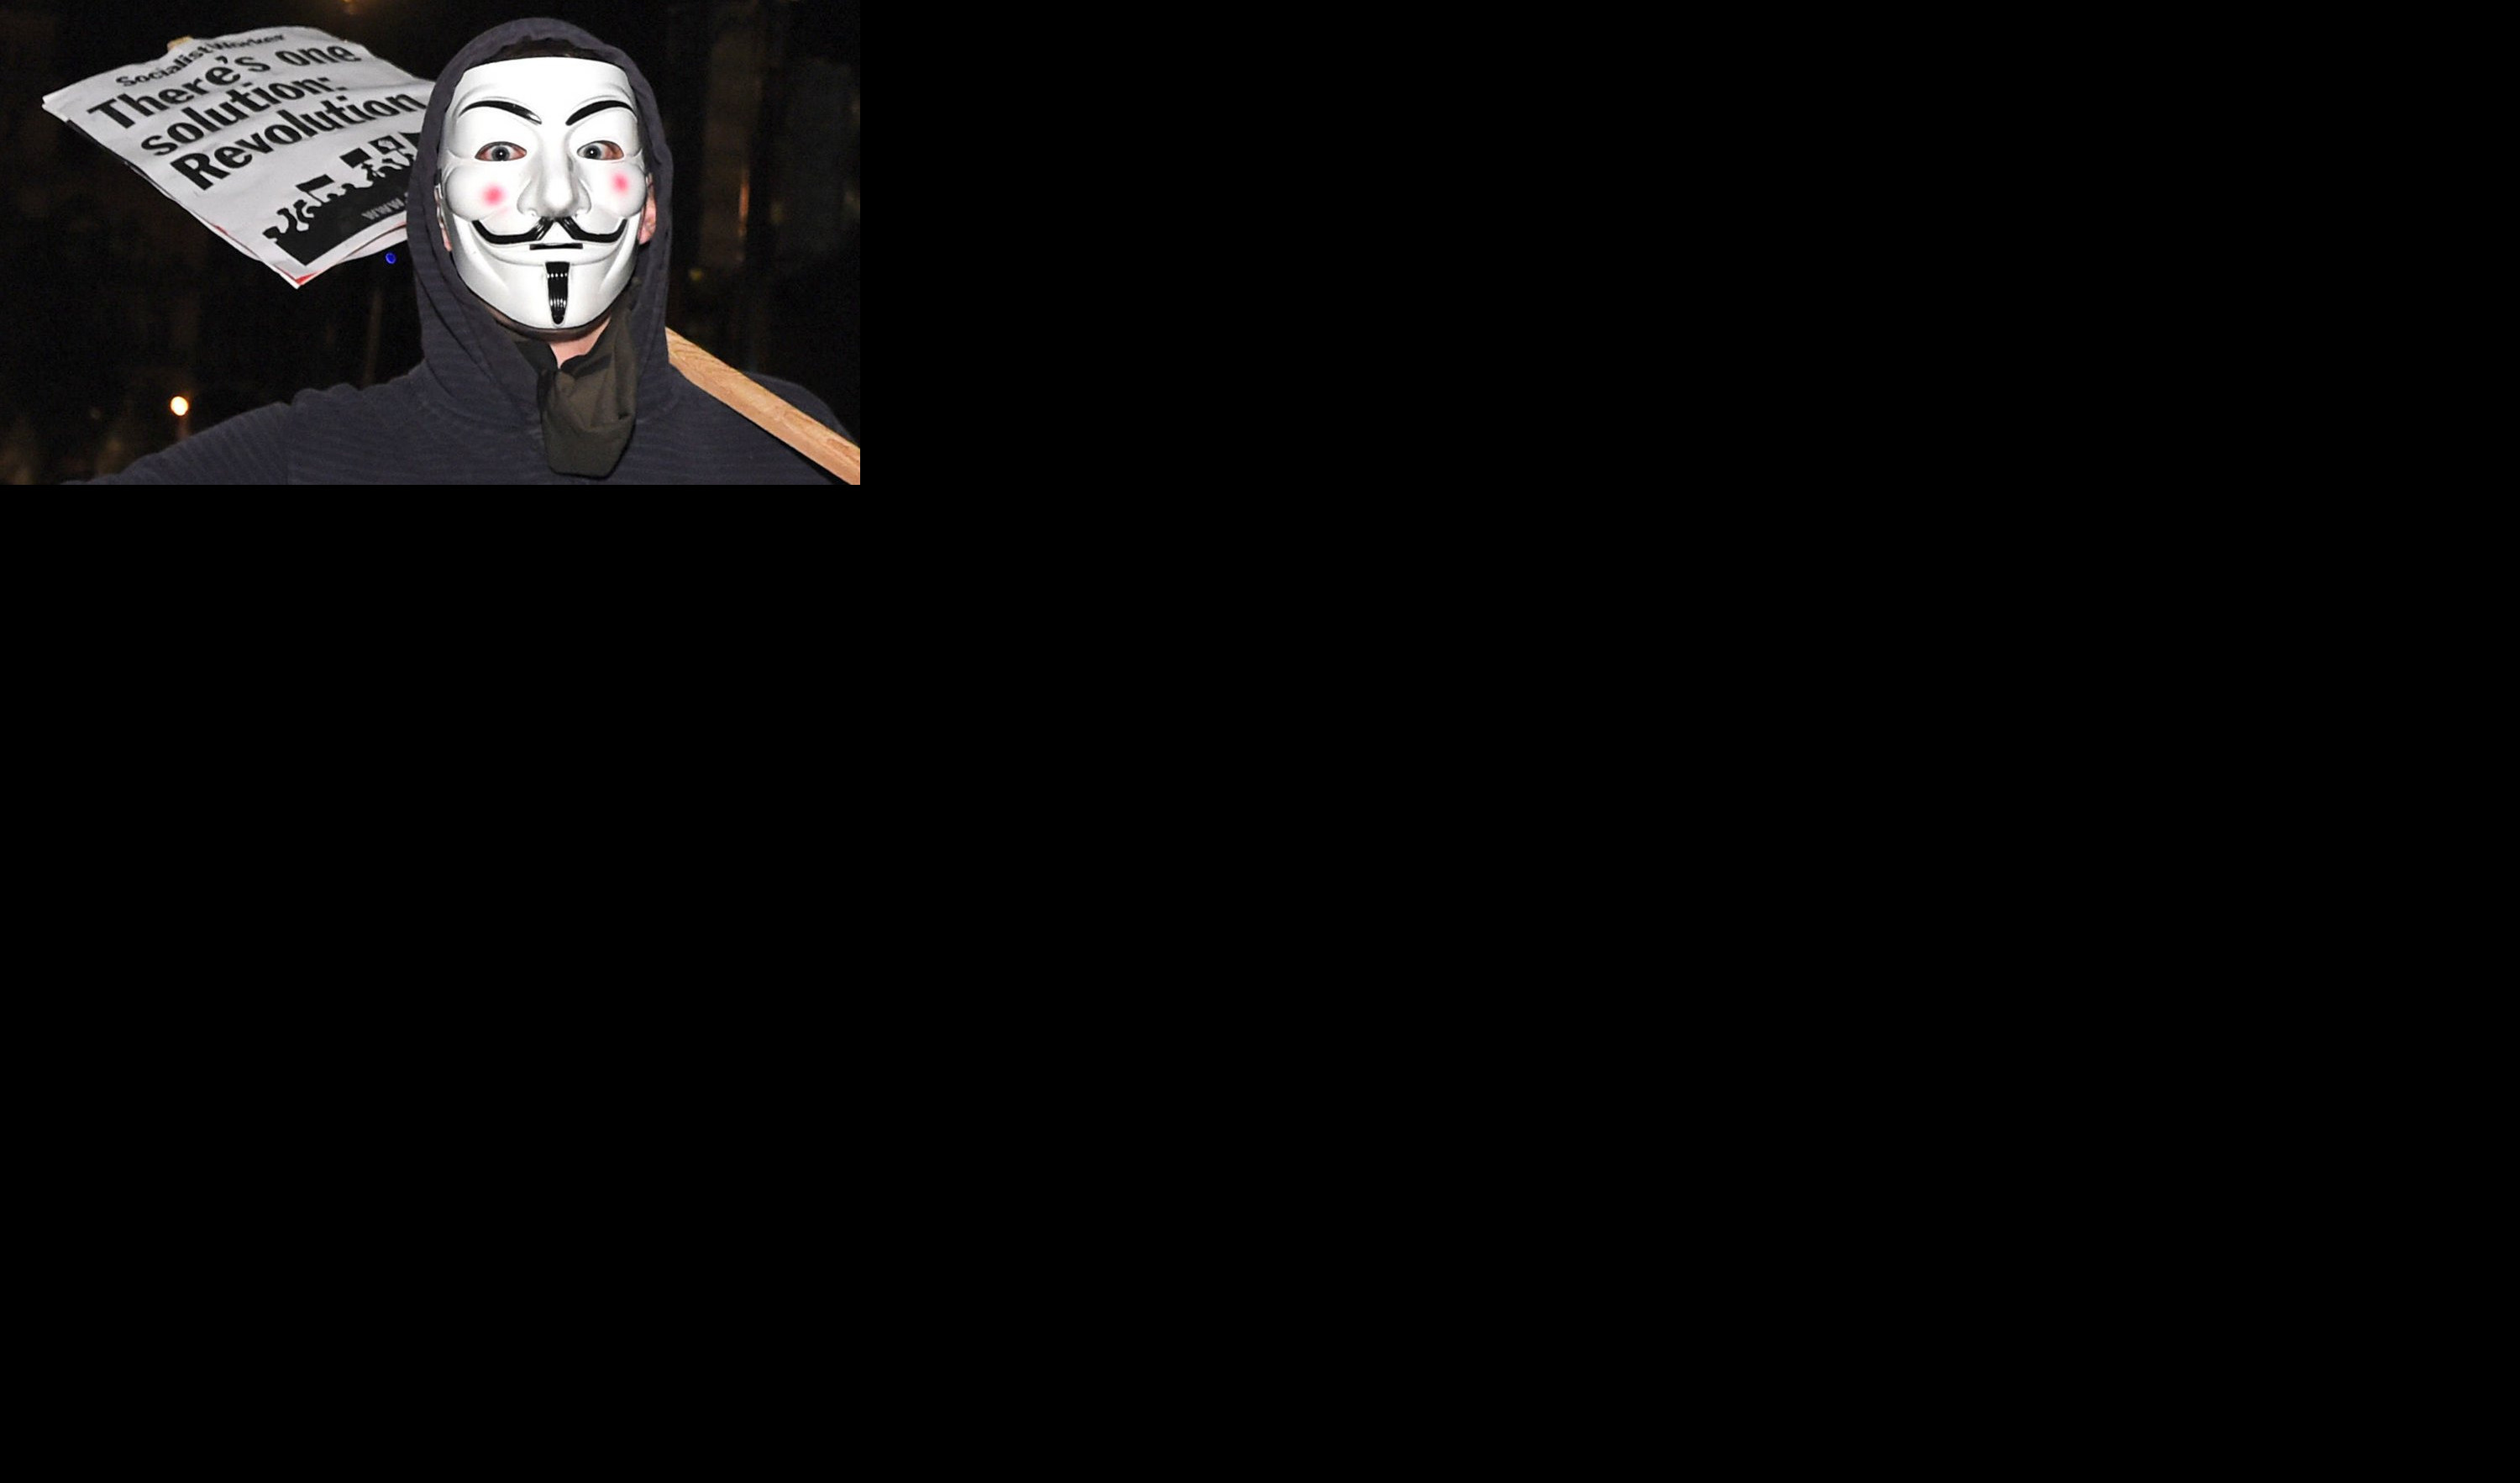 SPOMINJE SE I SRBIJA: Novi dokumenti "Anonimusa" o britanskom antiruskom projektu